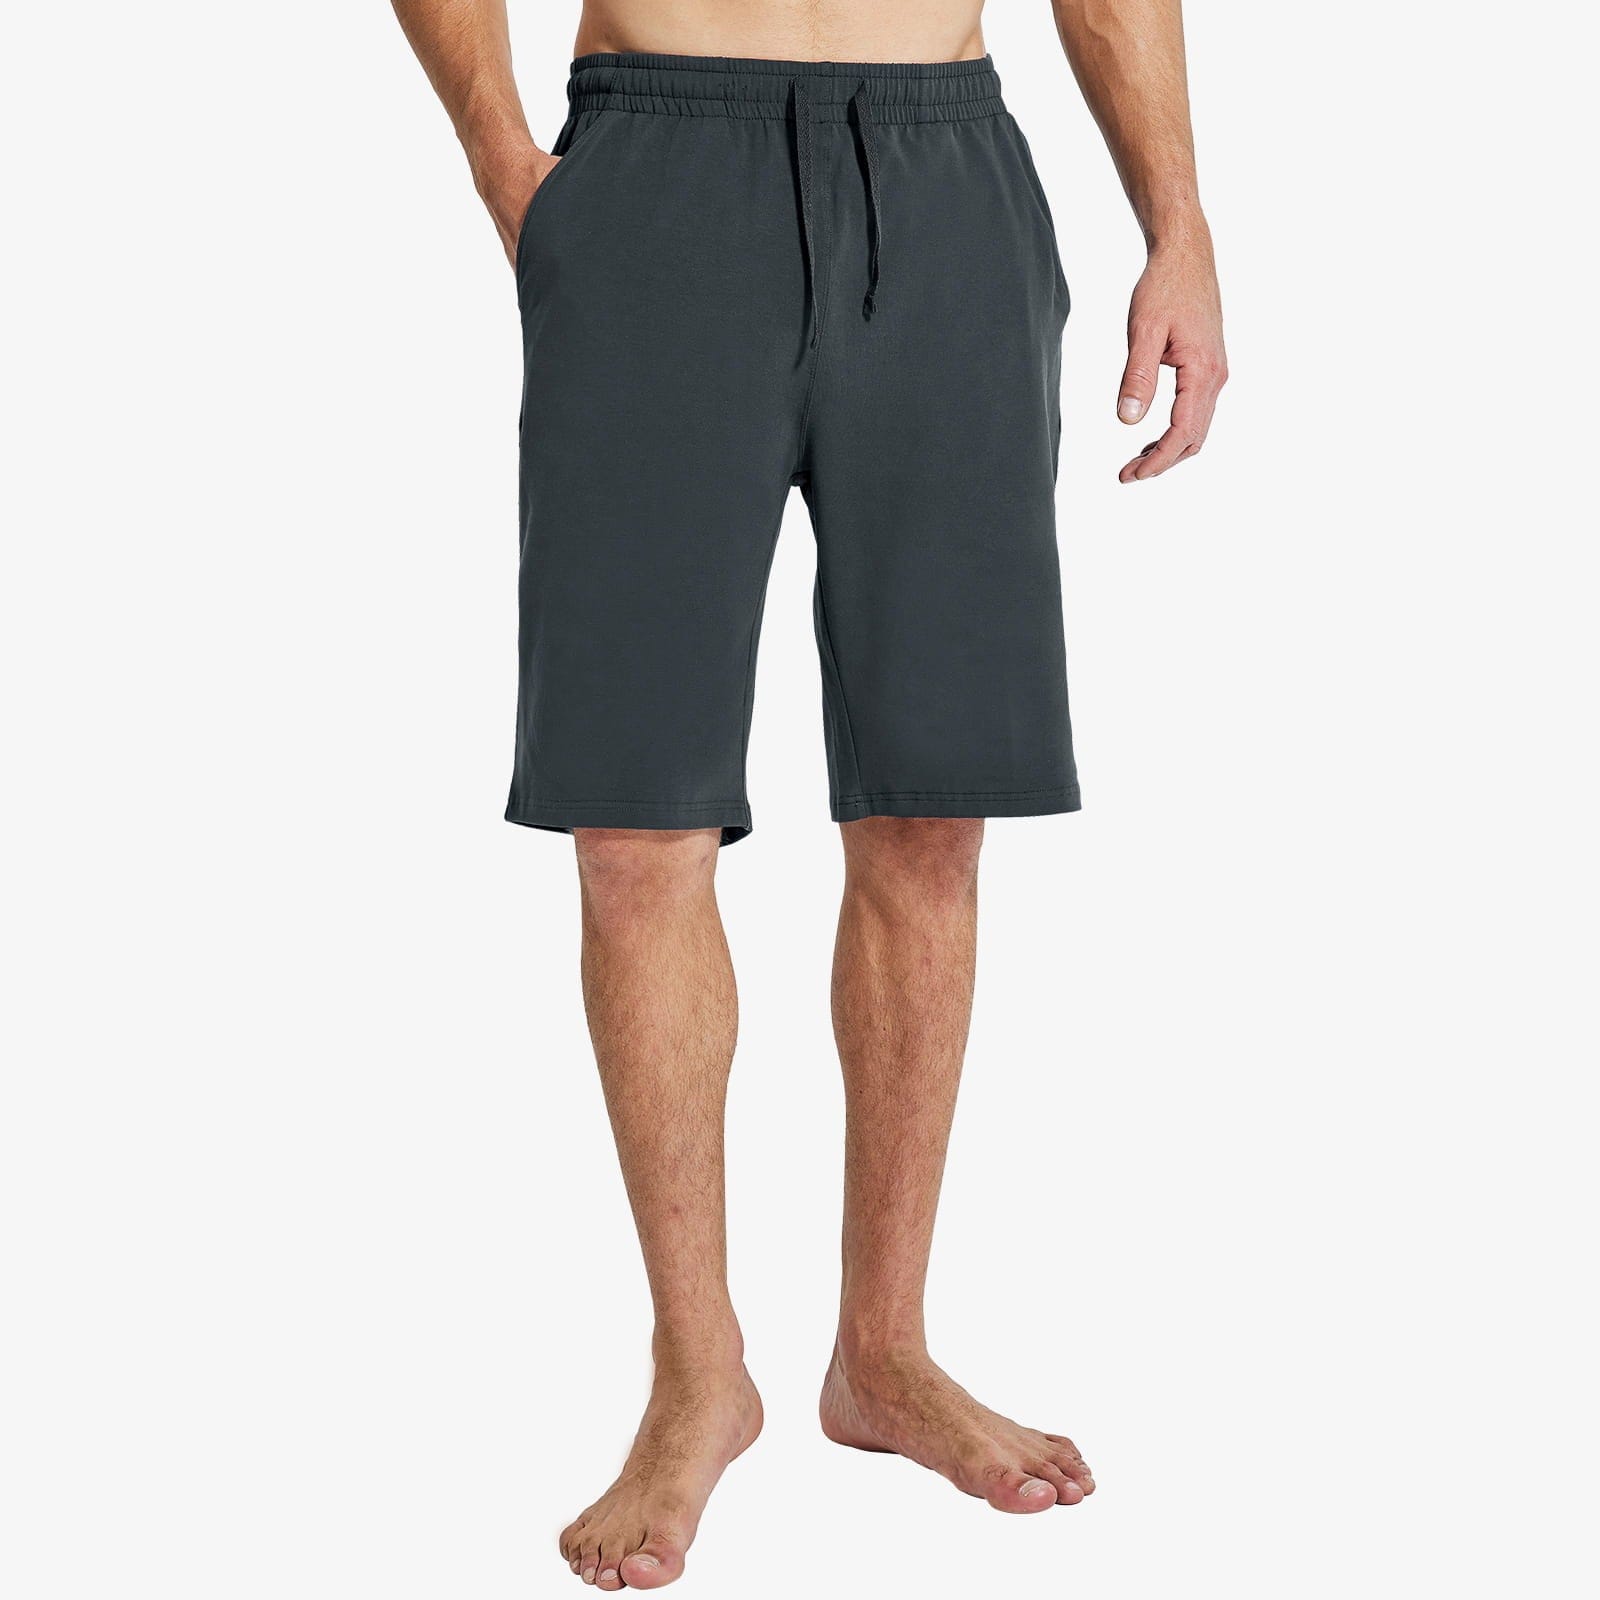 Men's Workout Cotton Shorts 11'' Long Gym Athletic Knit Shorts Men's Shorts Charcoal / S MIER